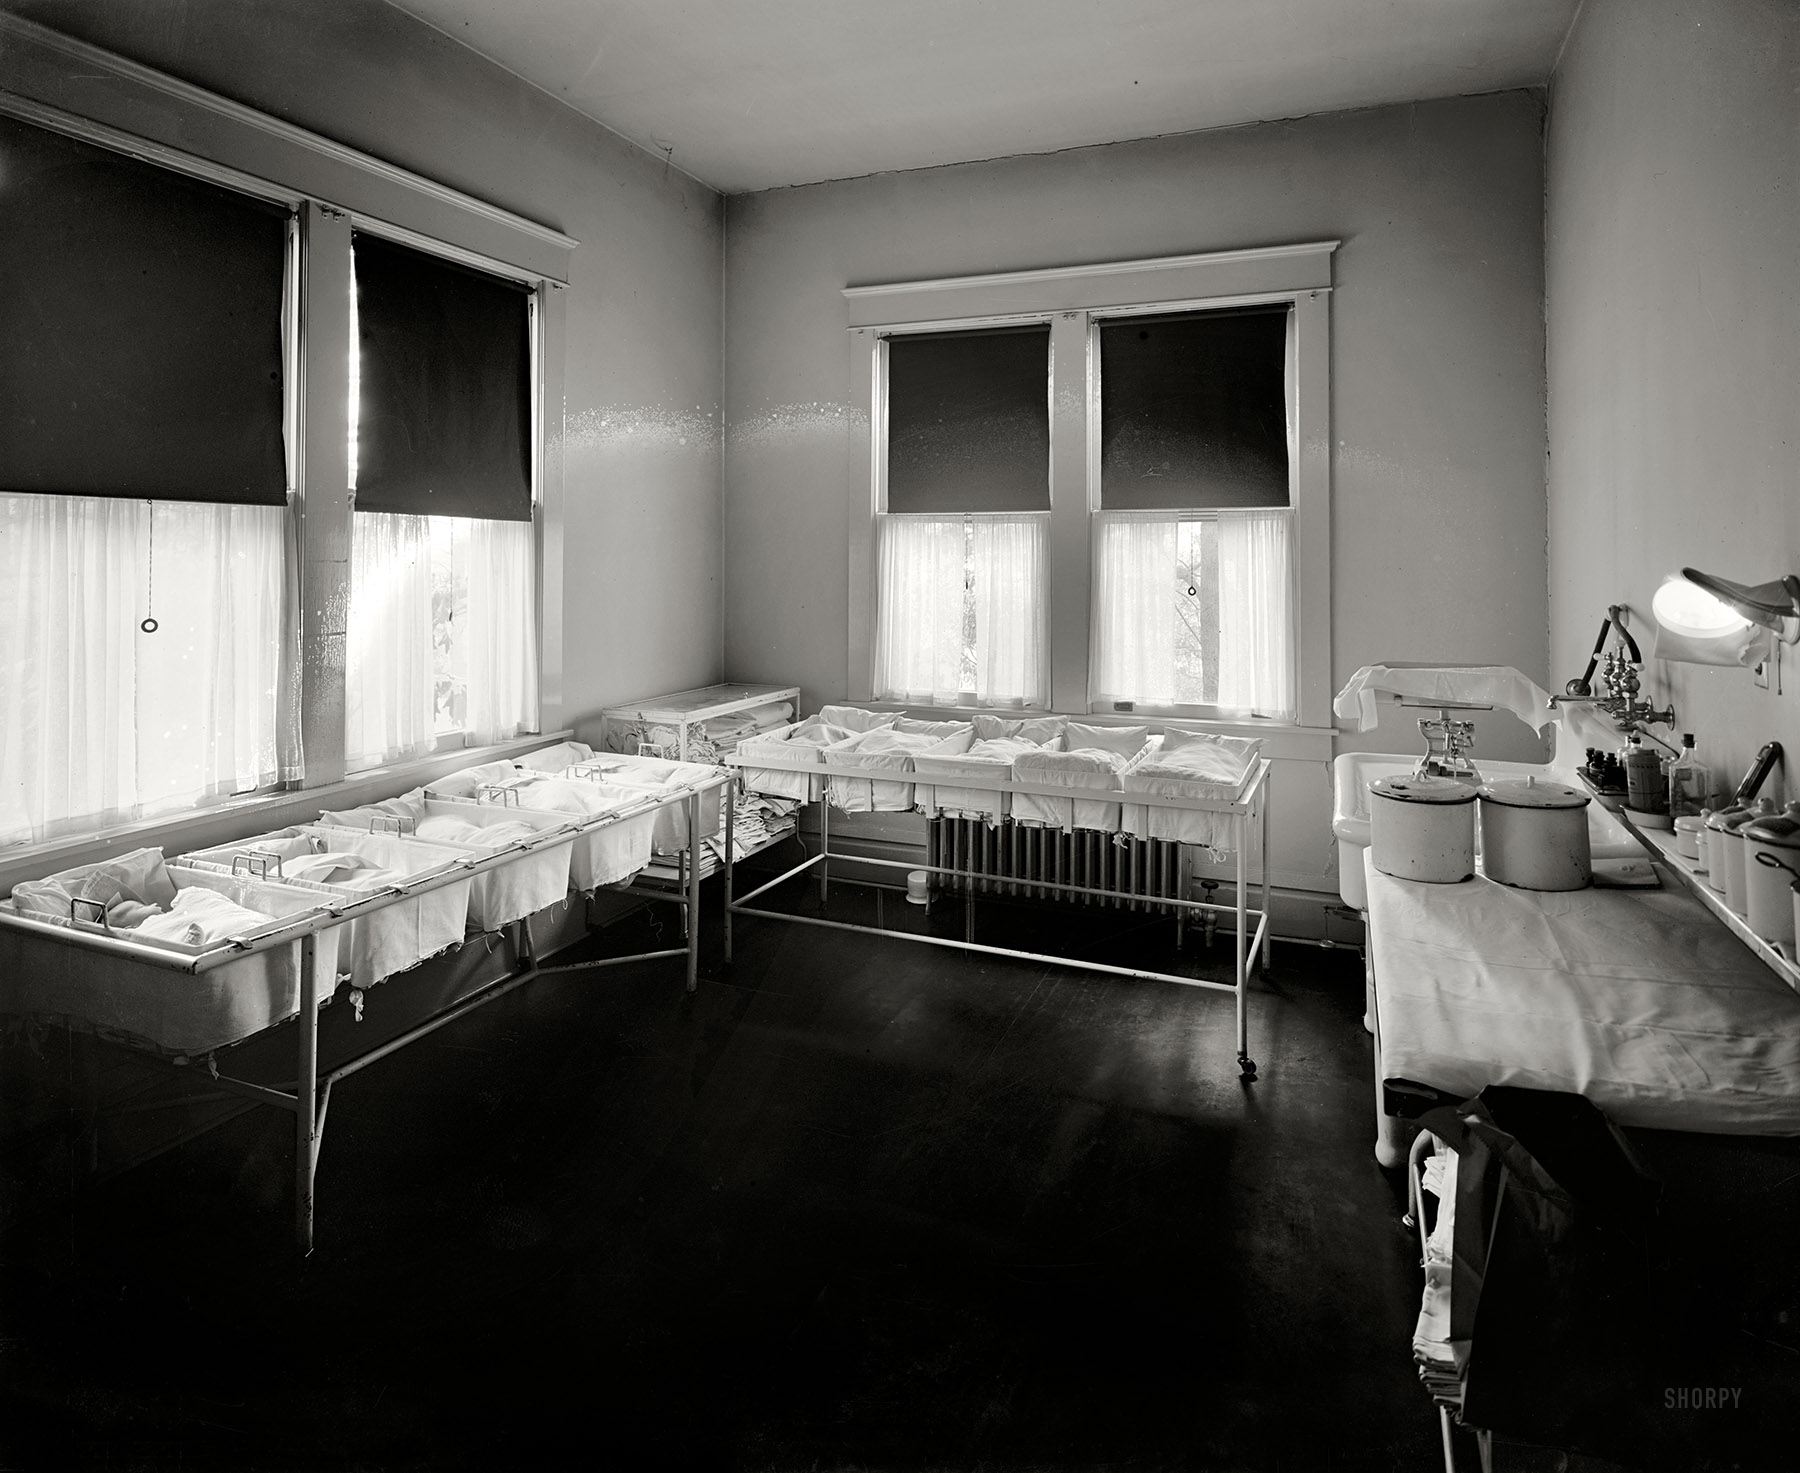 Takoma Park, Maryland, circa 1928. "Washington Sanitarium nursery." National Photo Company Collection glass negative. View full size.